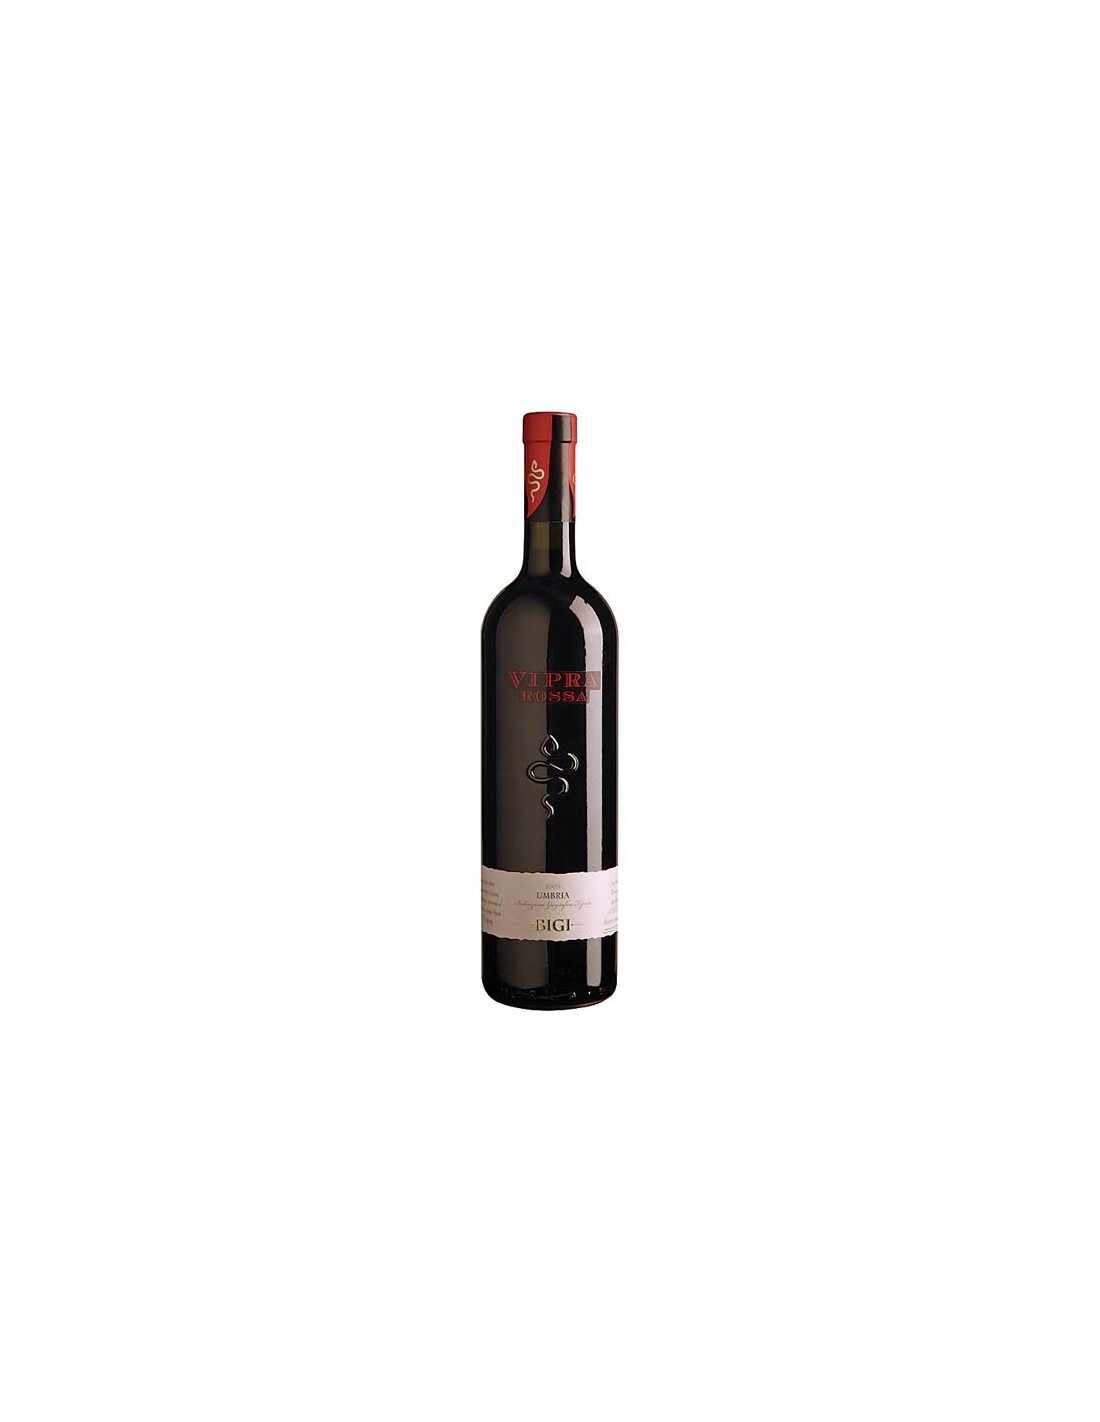 Vin rosu demisec, Vipra Rosa, Bigi Umbria, 13.5% alc., 0.75L, Italia